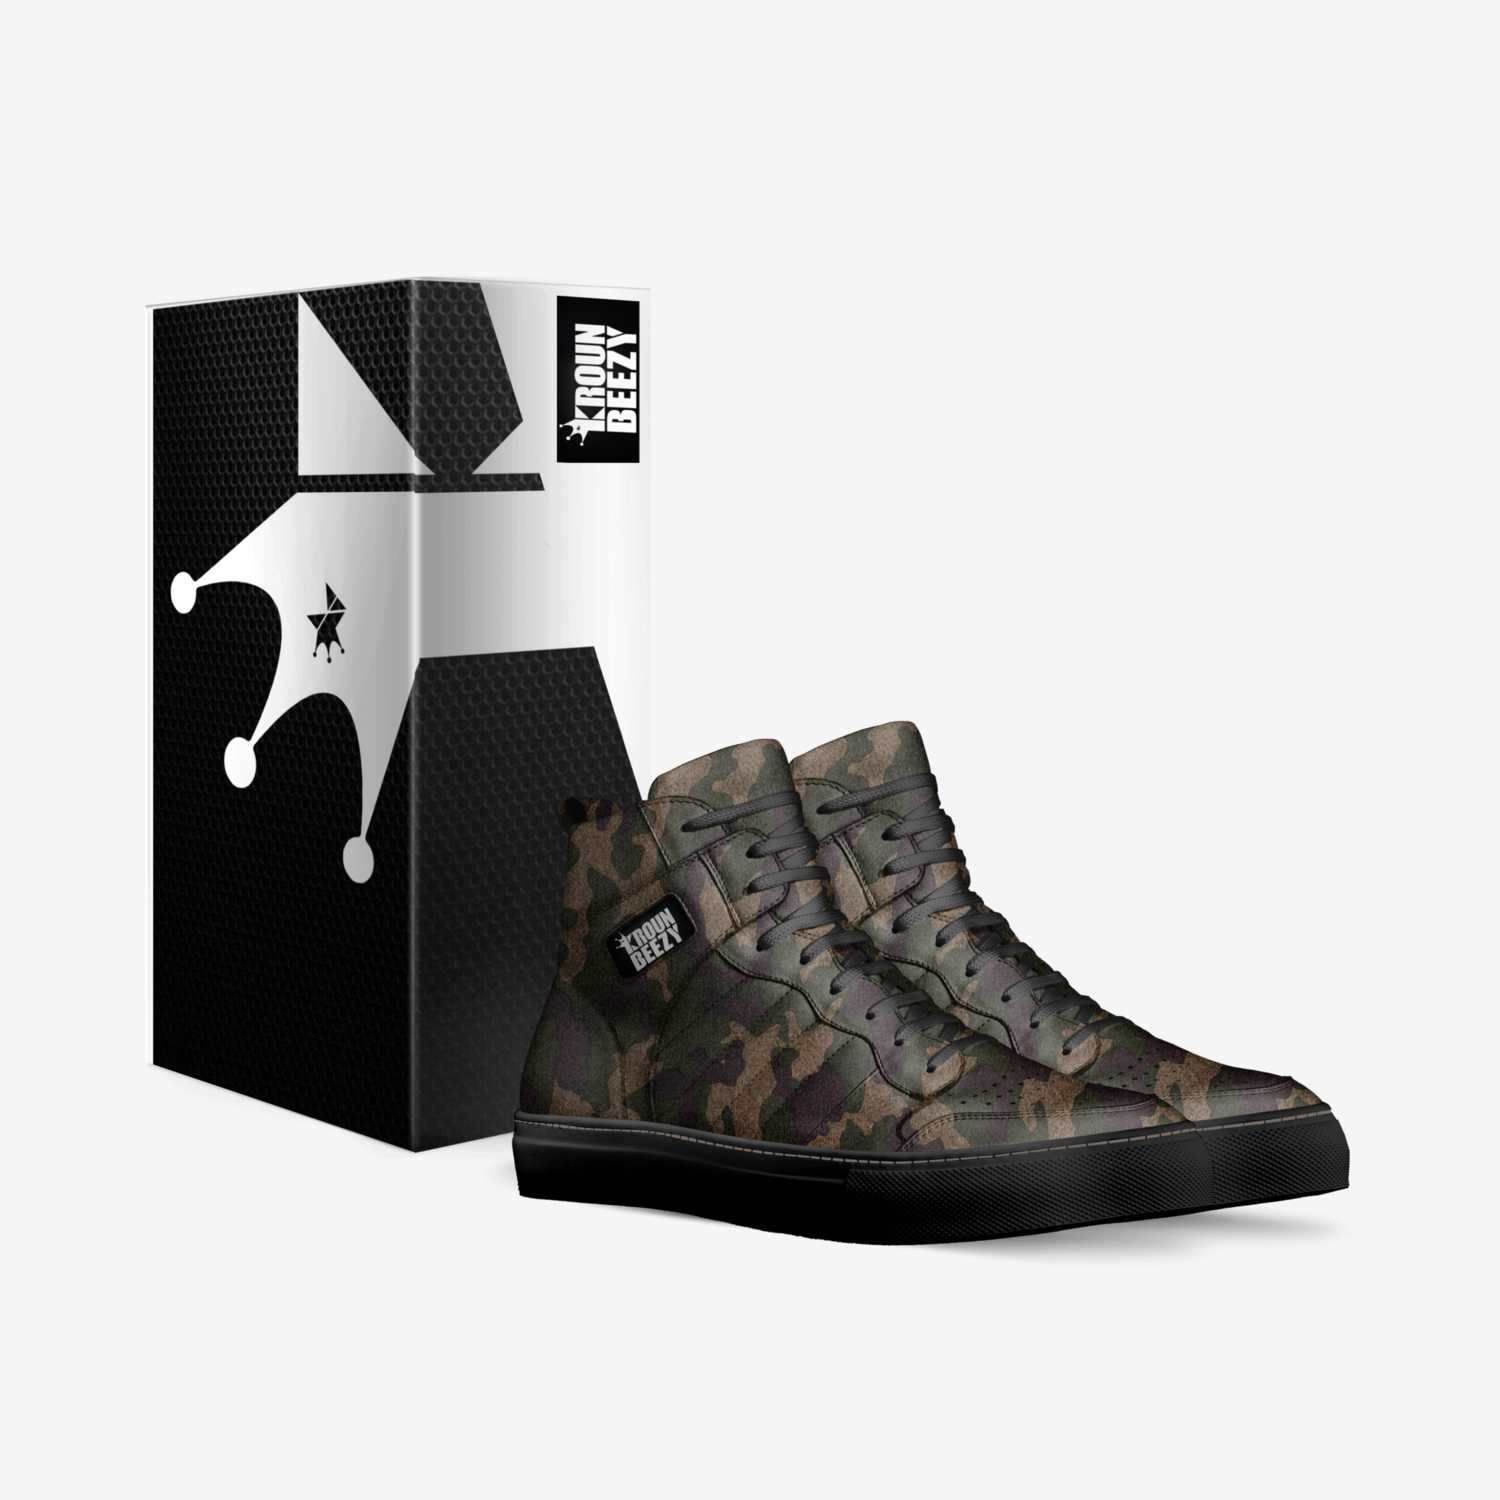 Kroun Kombatz custom made in Italy shoes by Ryan Colson | Box view